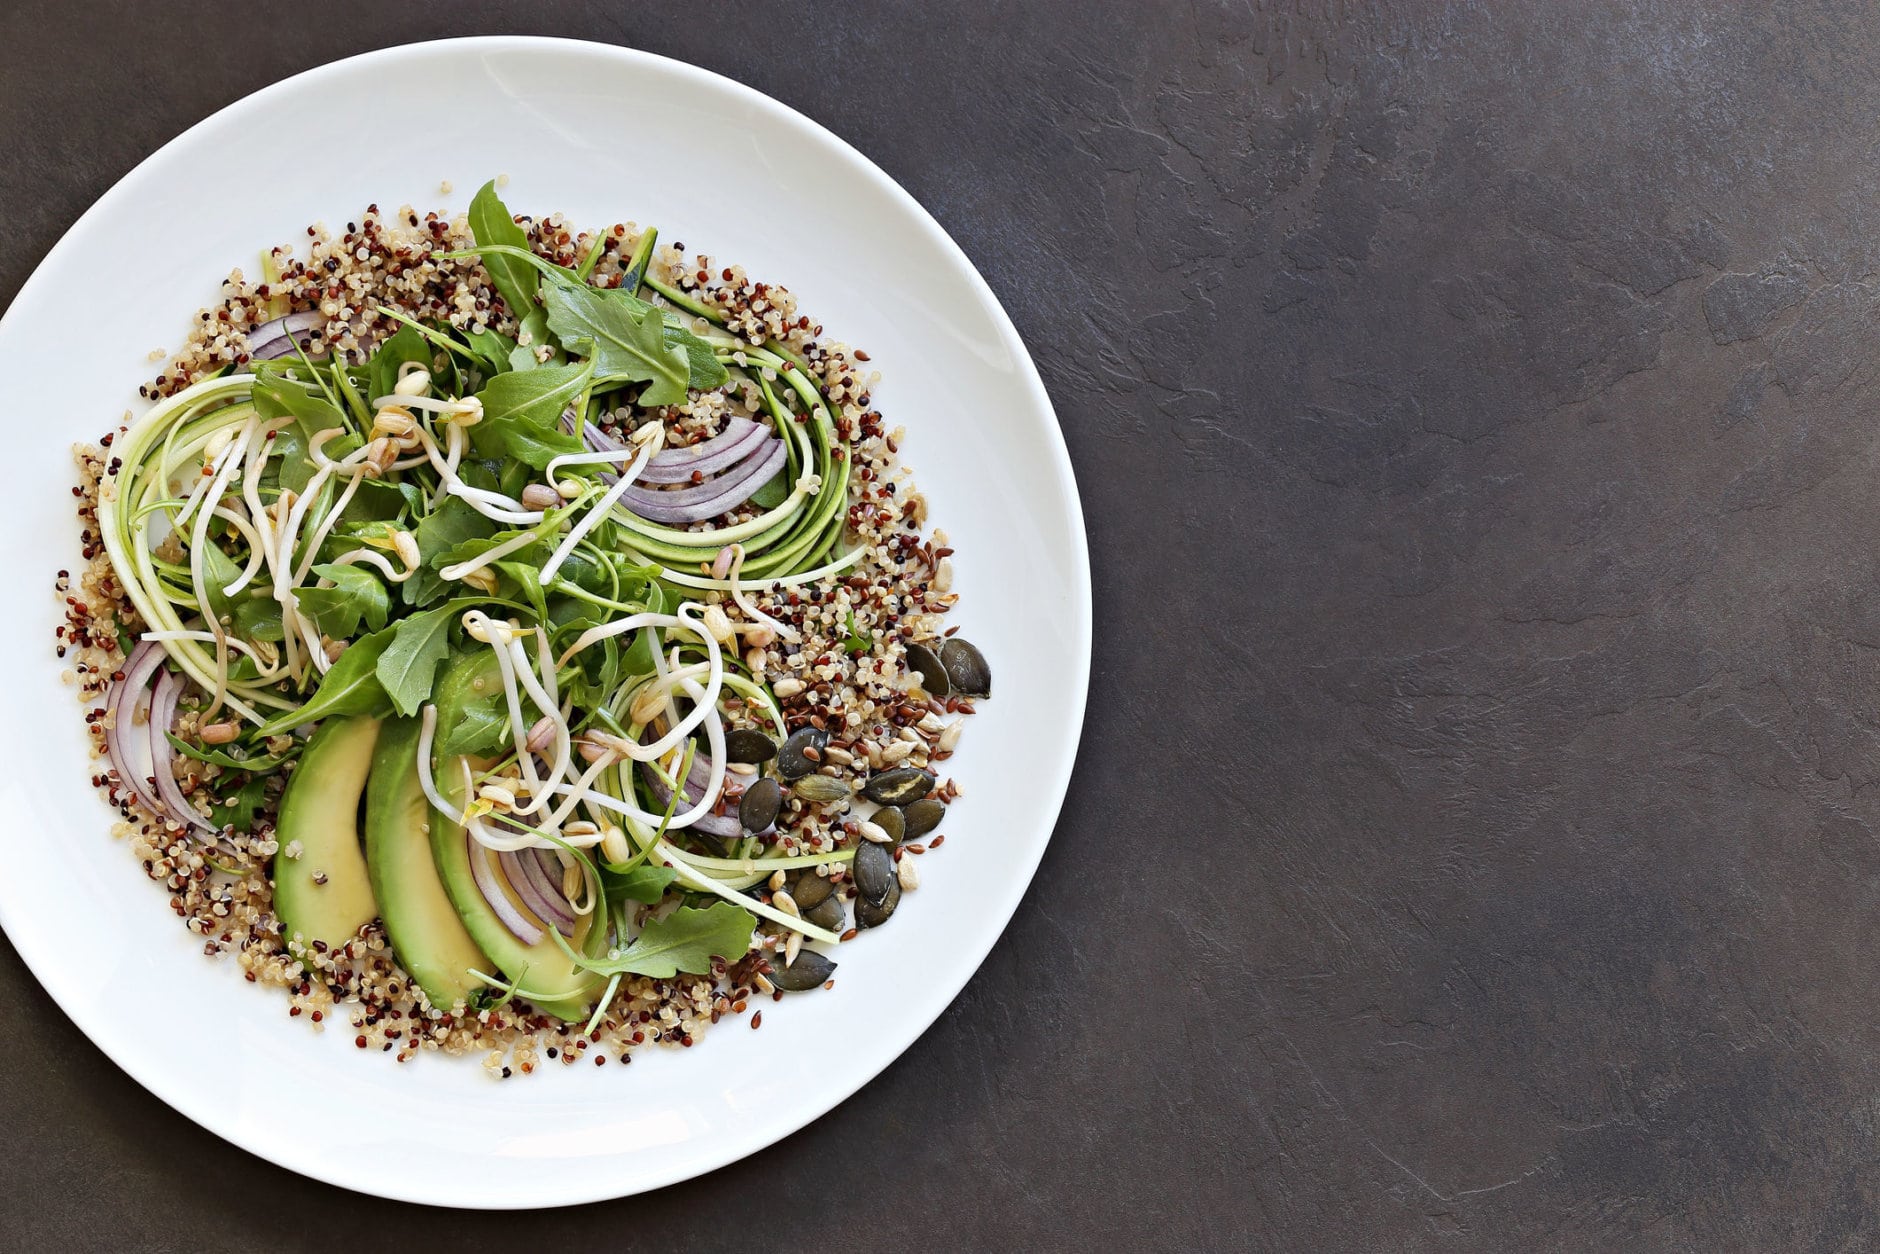 Quinoa detox salad with avocado, arugula, zucchini and seed mix. Plant based, clean eating, keto, super food.